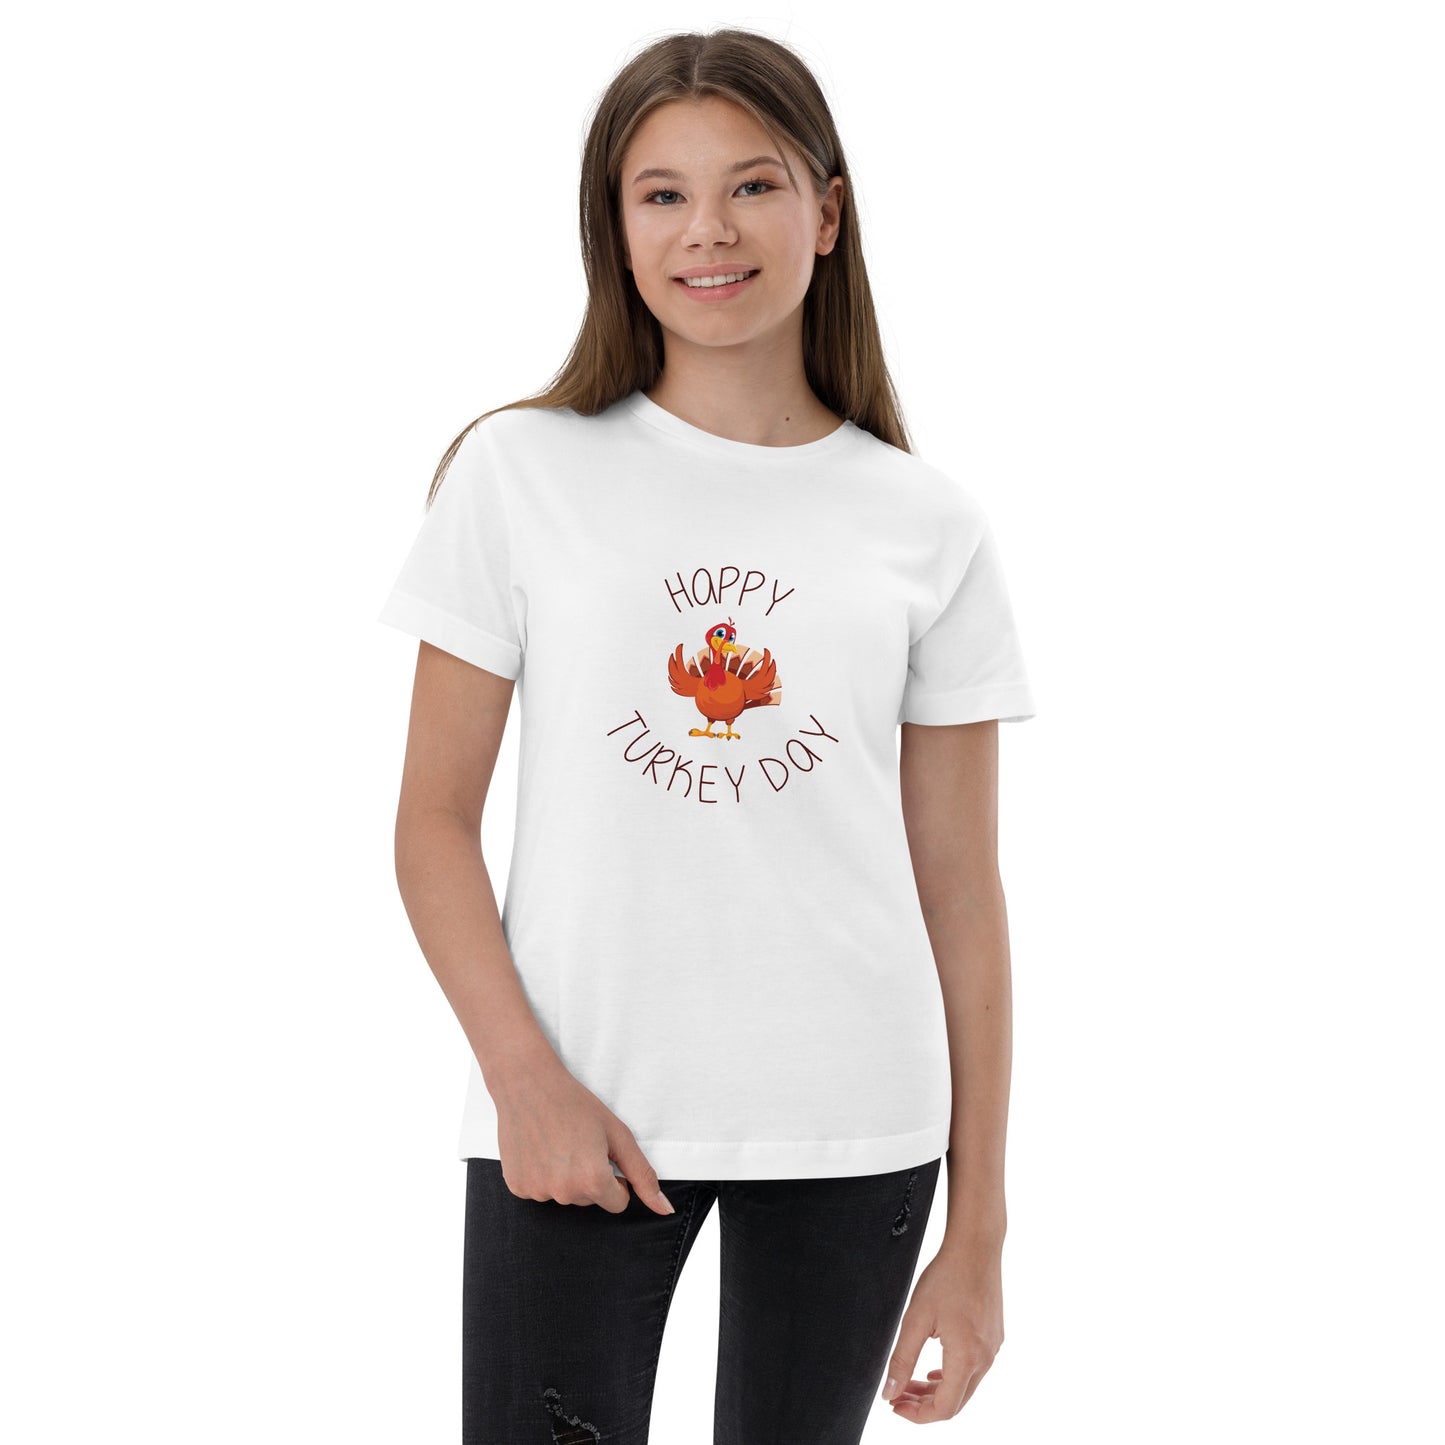 Happy Turkey Day Youth T-shirt